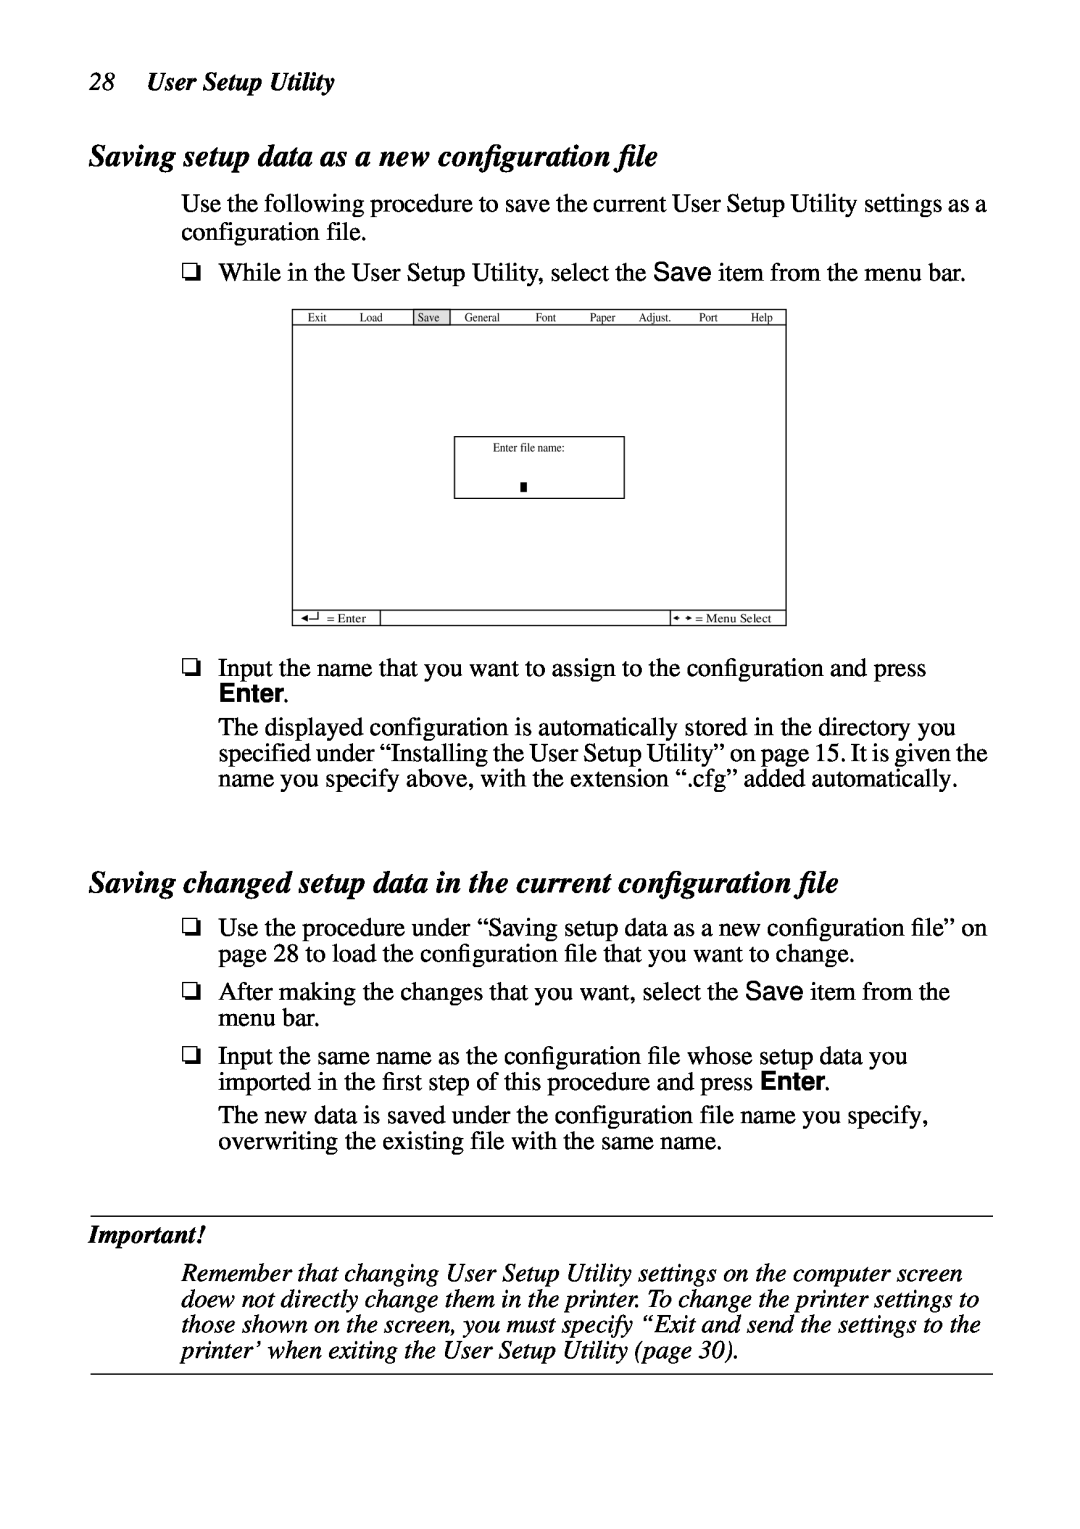 Star Micronics NX-2460C user manual Saving setup data as a new conﬁguration ﬁle, User Setup Utility 